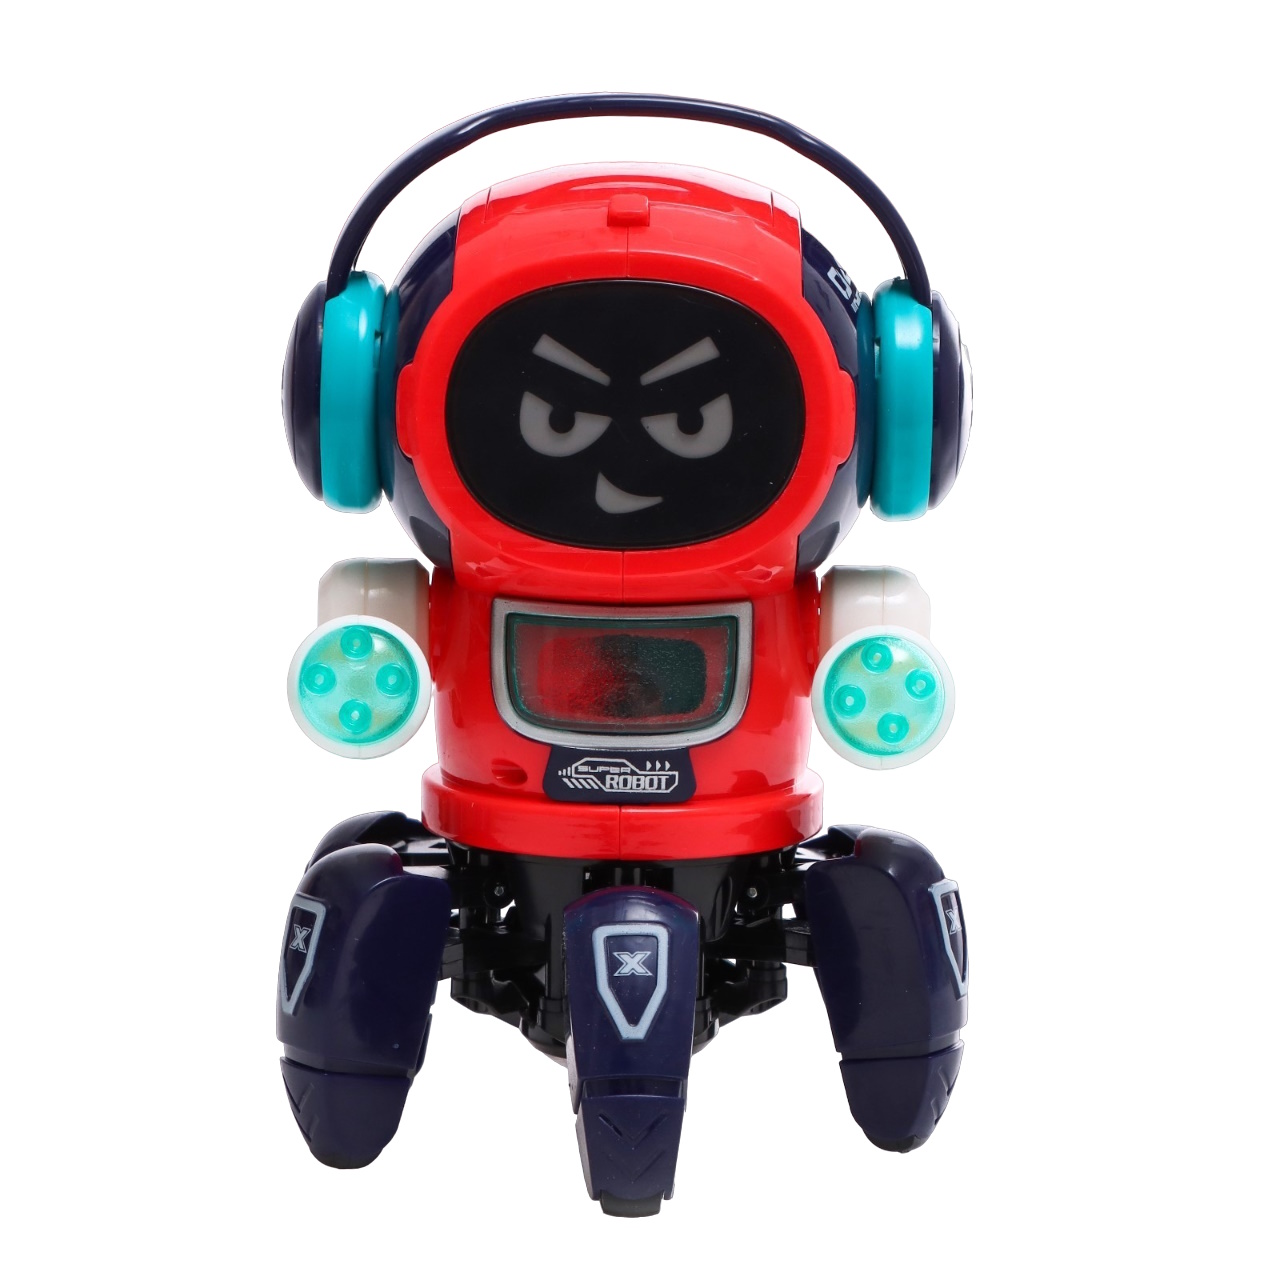 Интерактивный робот IQ Bot красный ZR157 интерактивный робот silverlit токибот красный